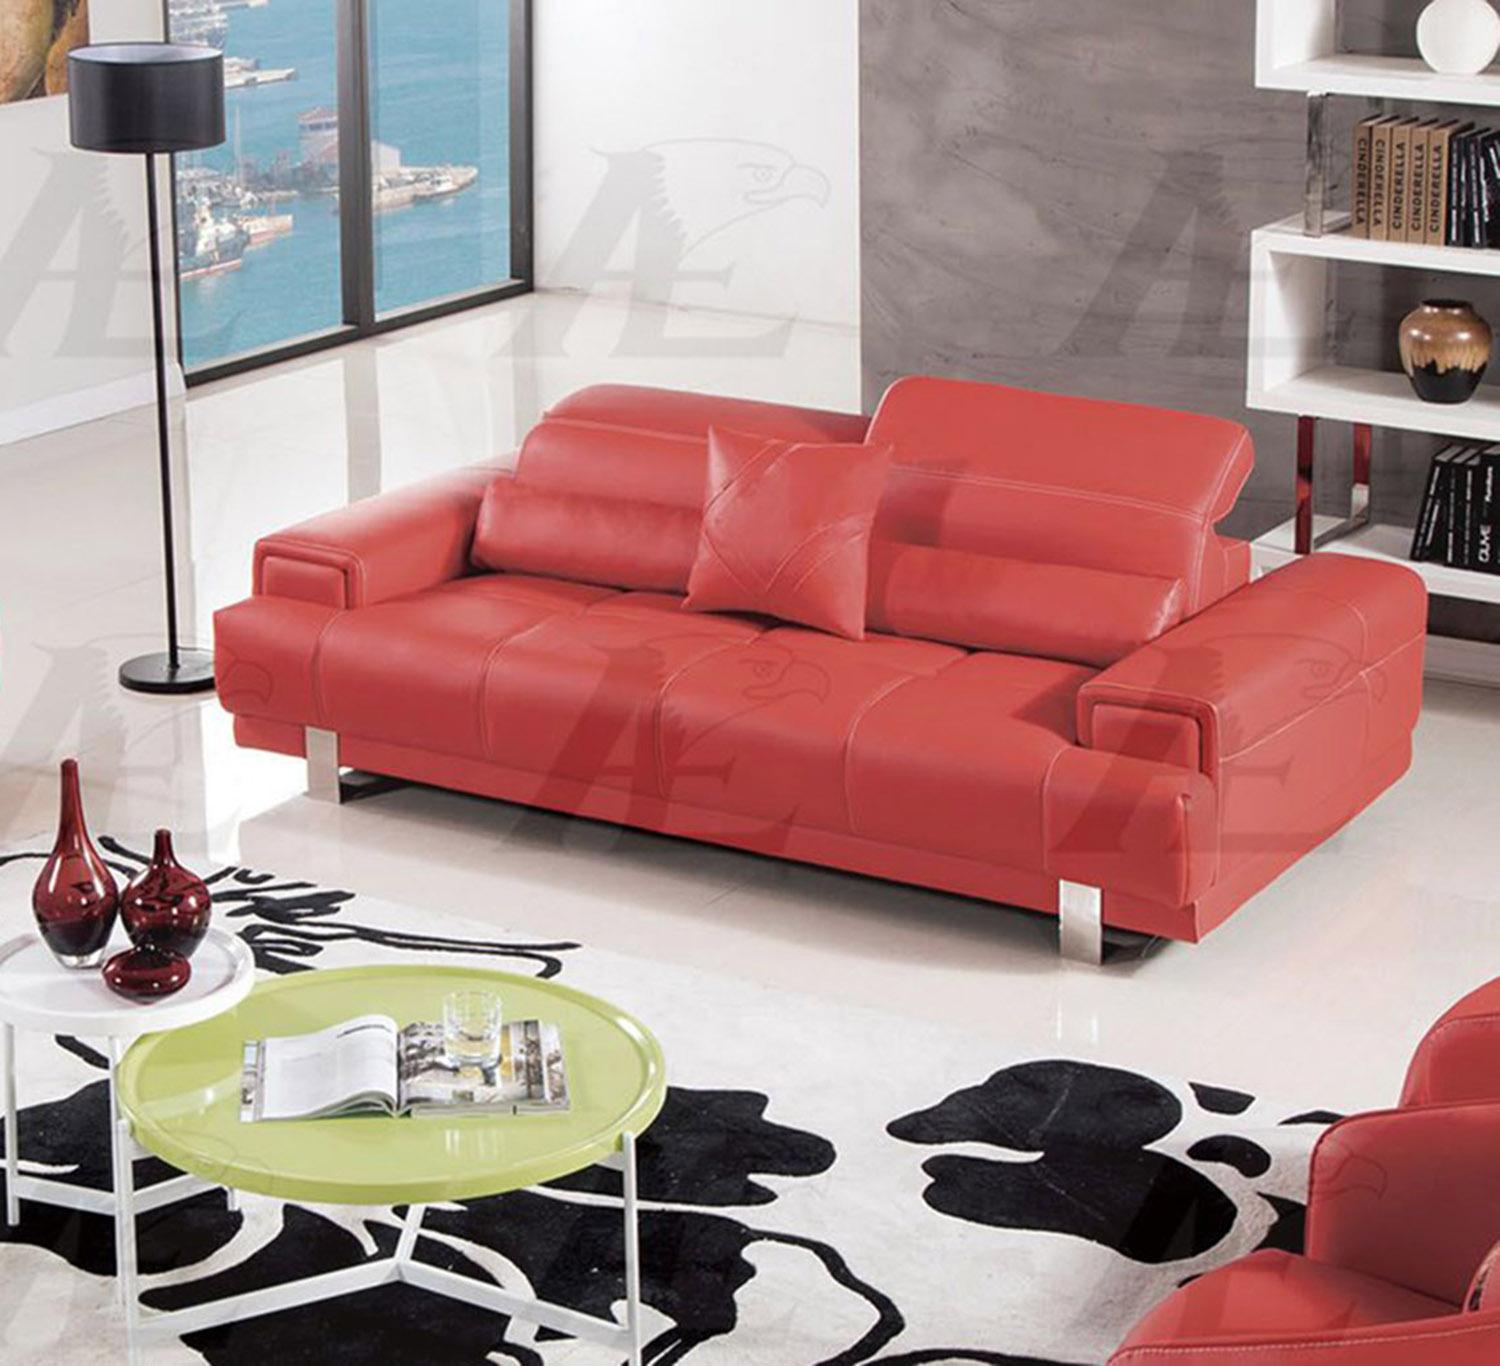 

    
American Eagle Furniture AE606-RED Sofa Red AE606-RED-Sofa
